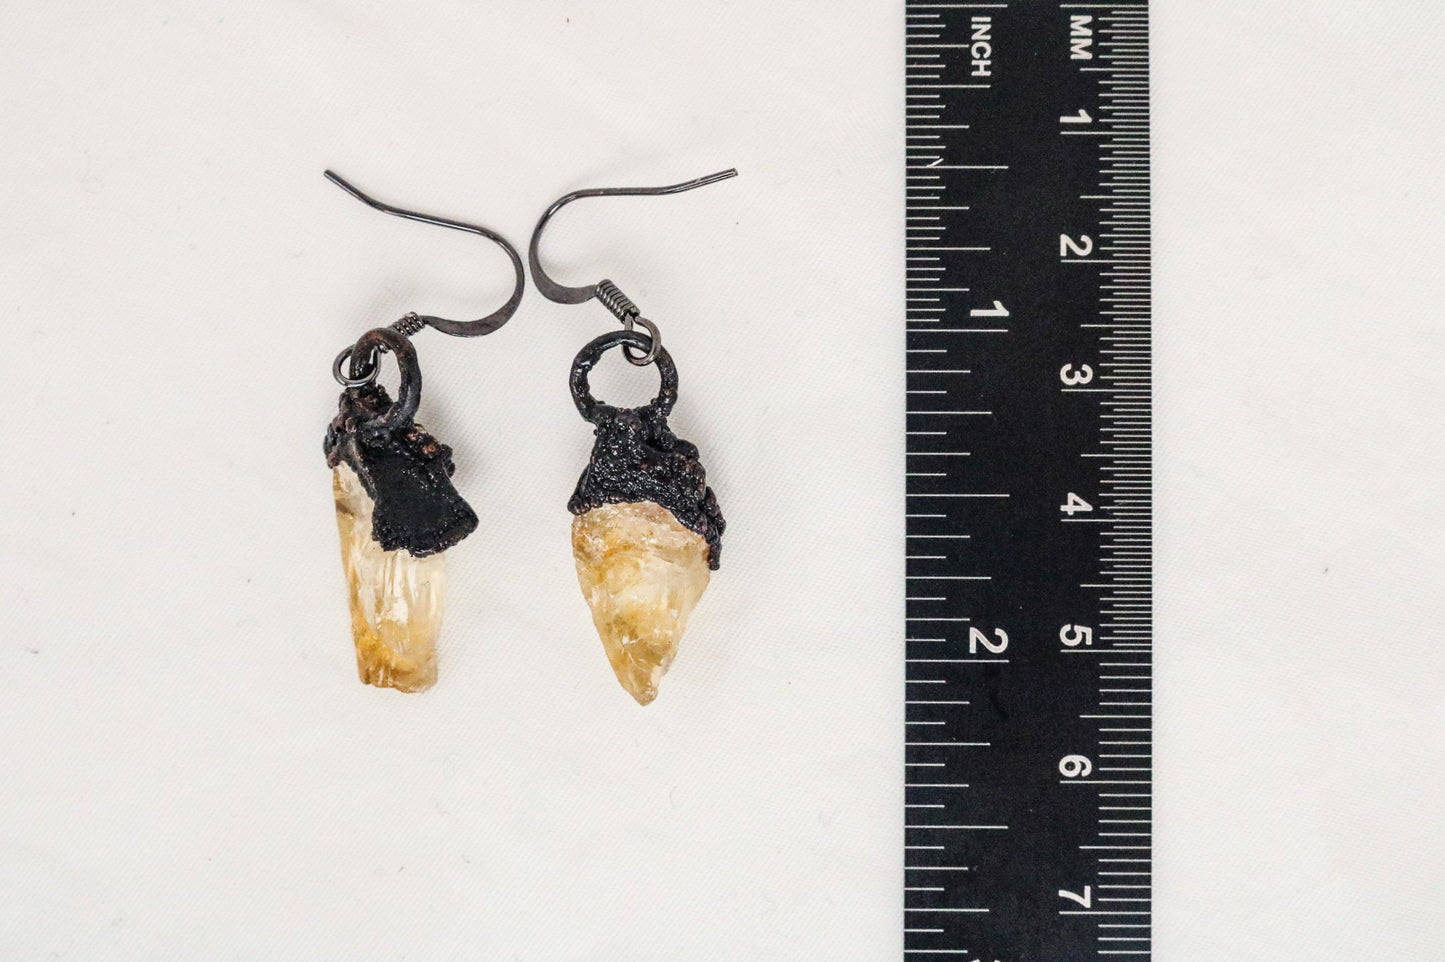 Raw Citrine & Pyrite Earrings